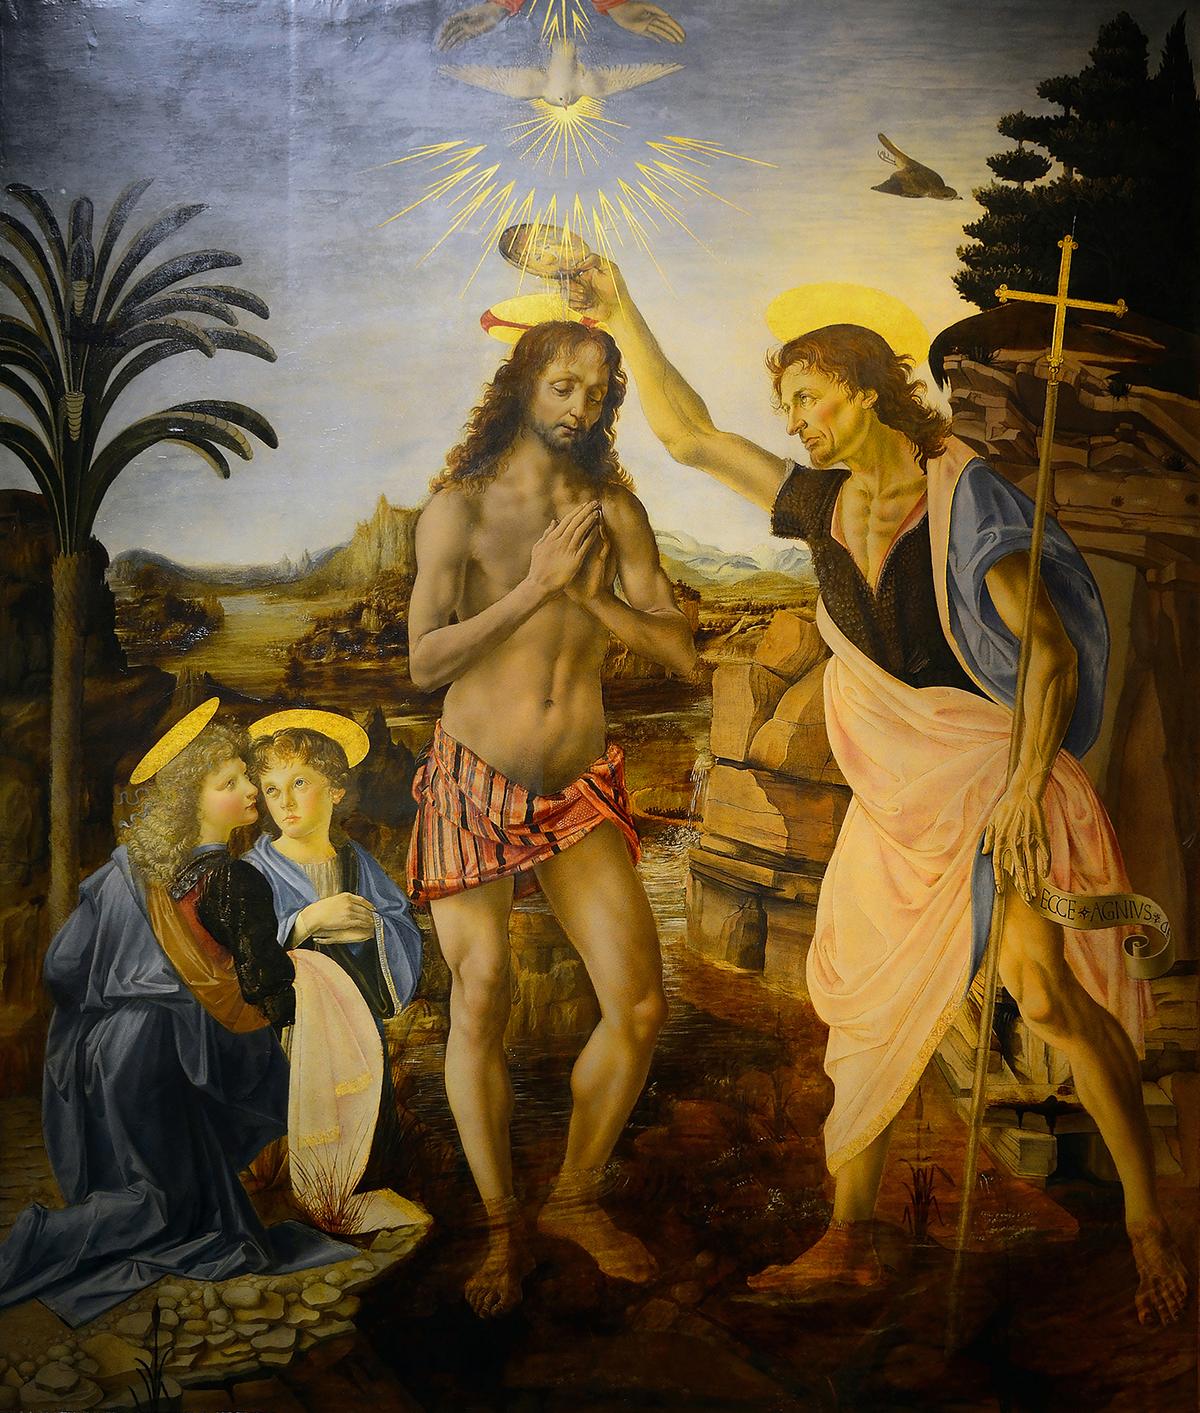 "The Baptism of Christ," 1470–1475, by Andrea del Verrocchio and Leonardo da Vinci. Leonardo painted the angel on the left. Oil and tempera on panel. Uffizi Gallery, Florence, Italy. (Public Domain)